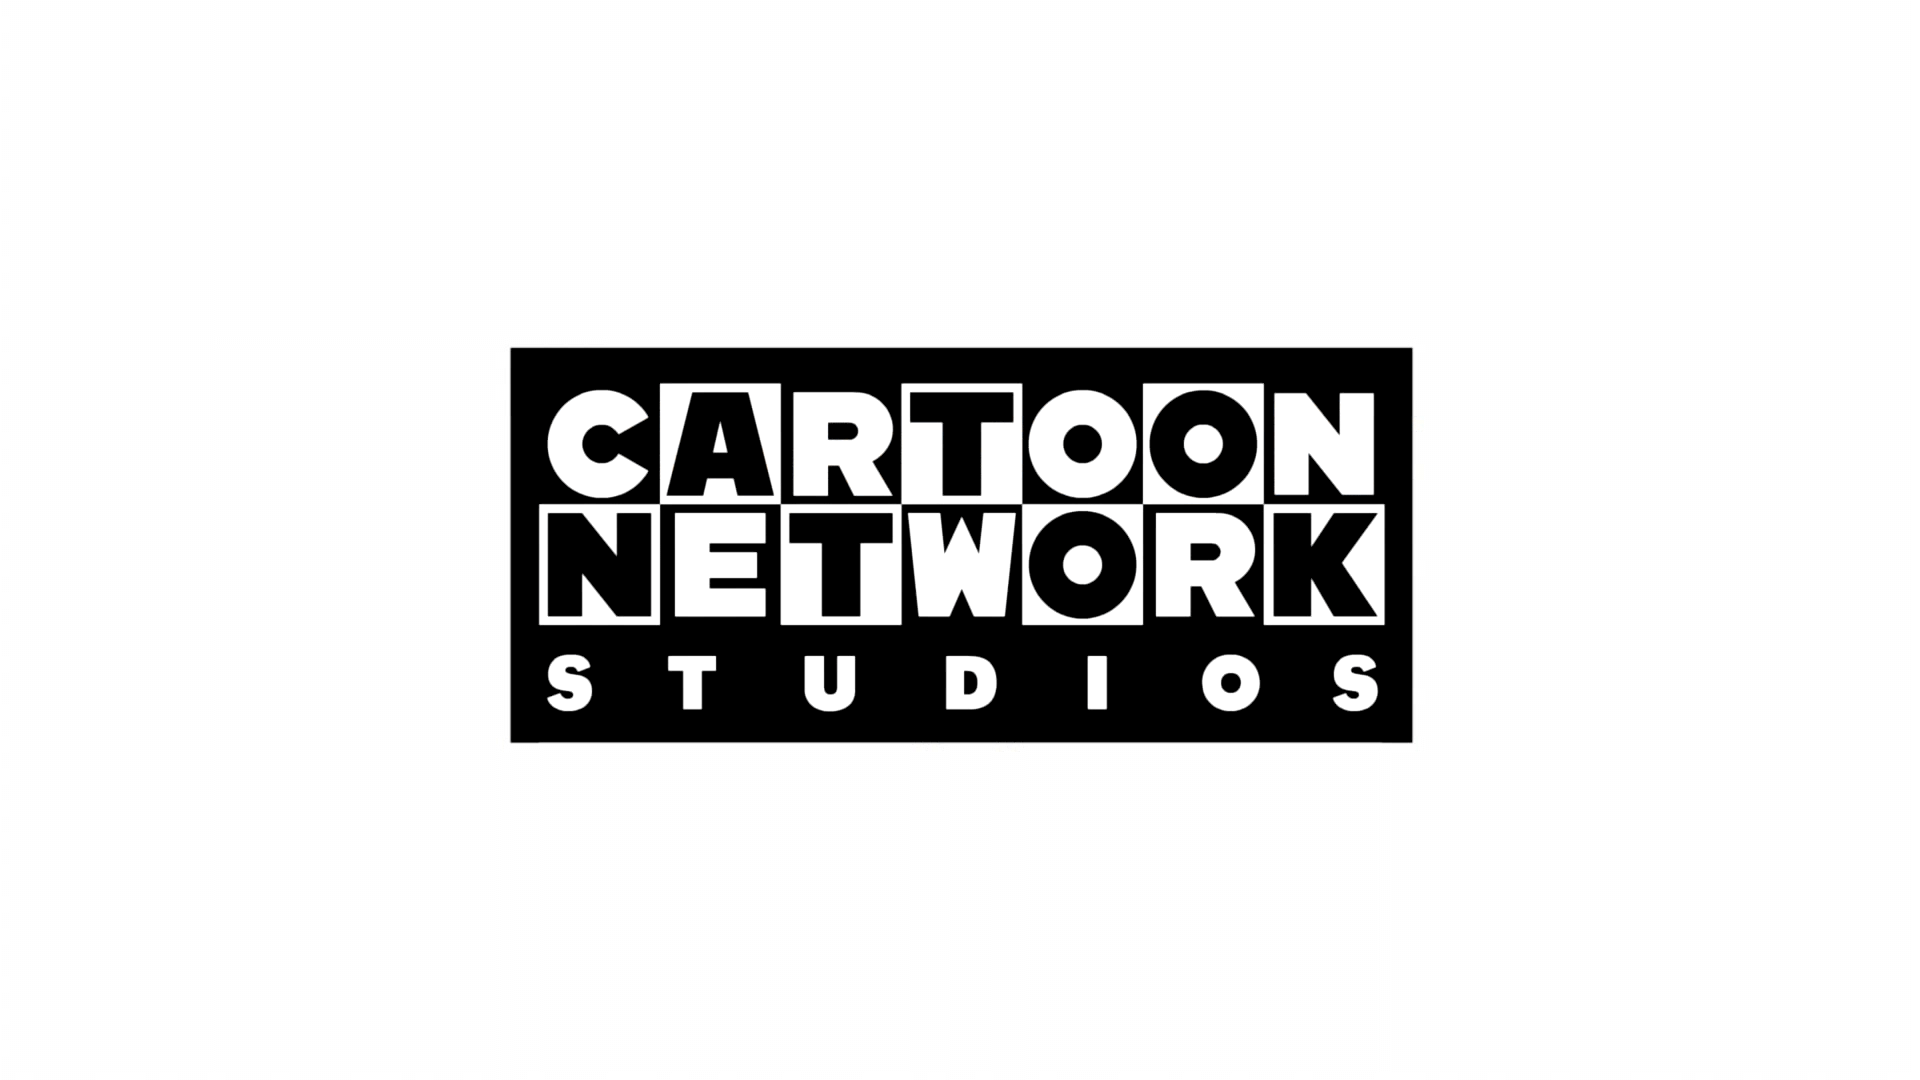 Cartoon Network Studios Logo - Cartoon Network Studios | The Idea Wiki | FANDOM powered by Wikia